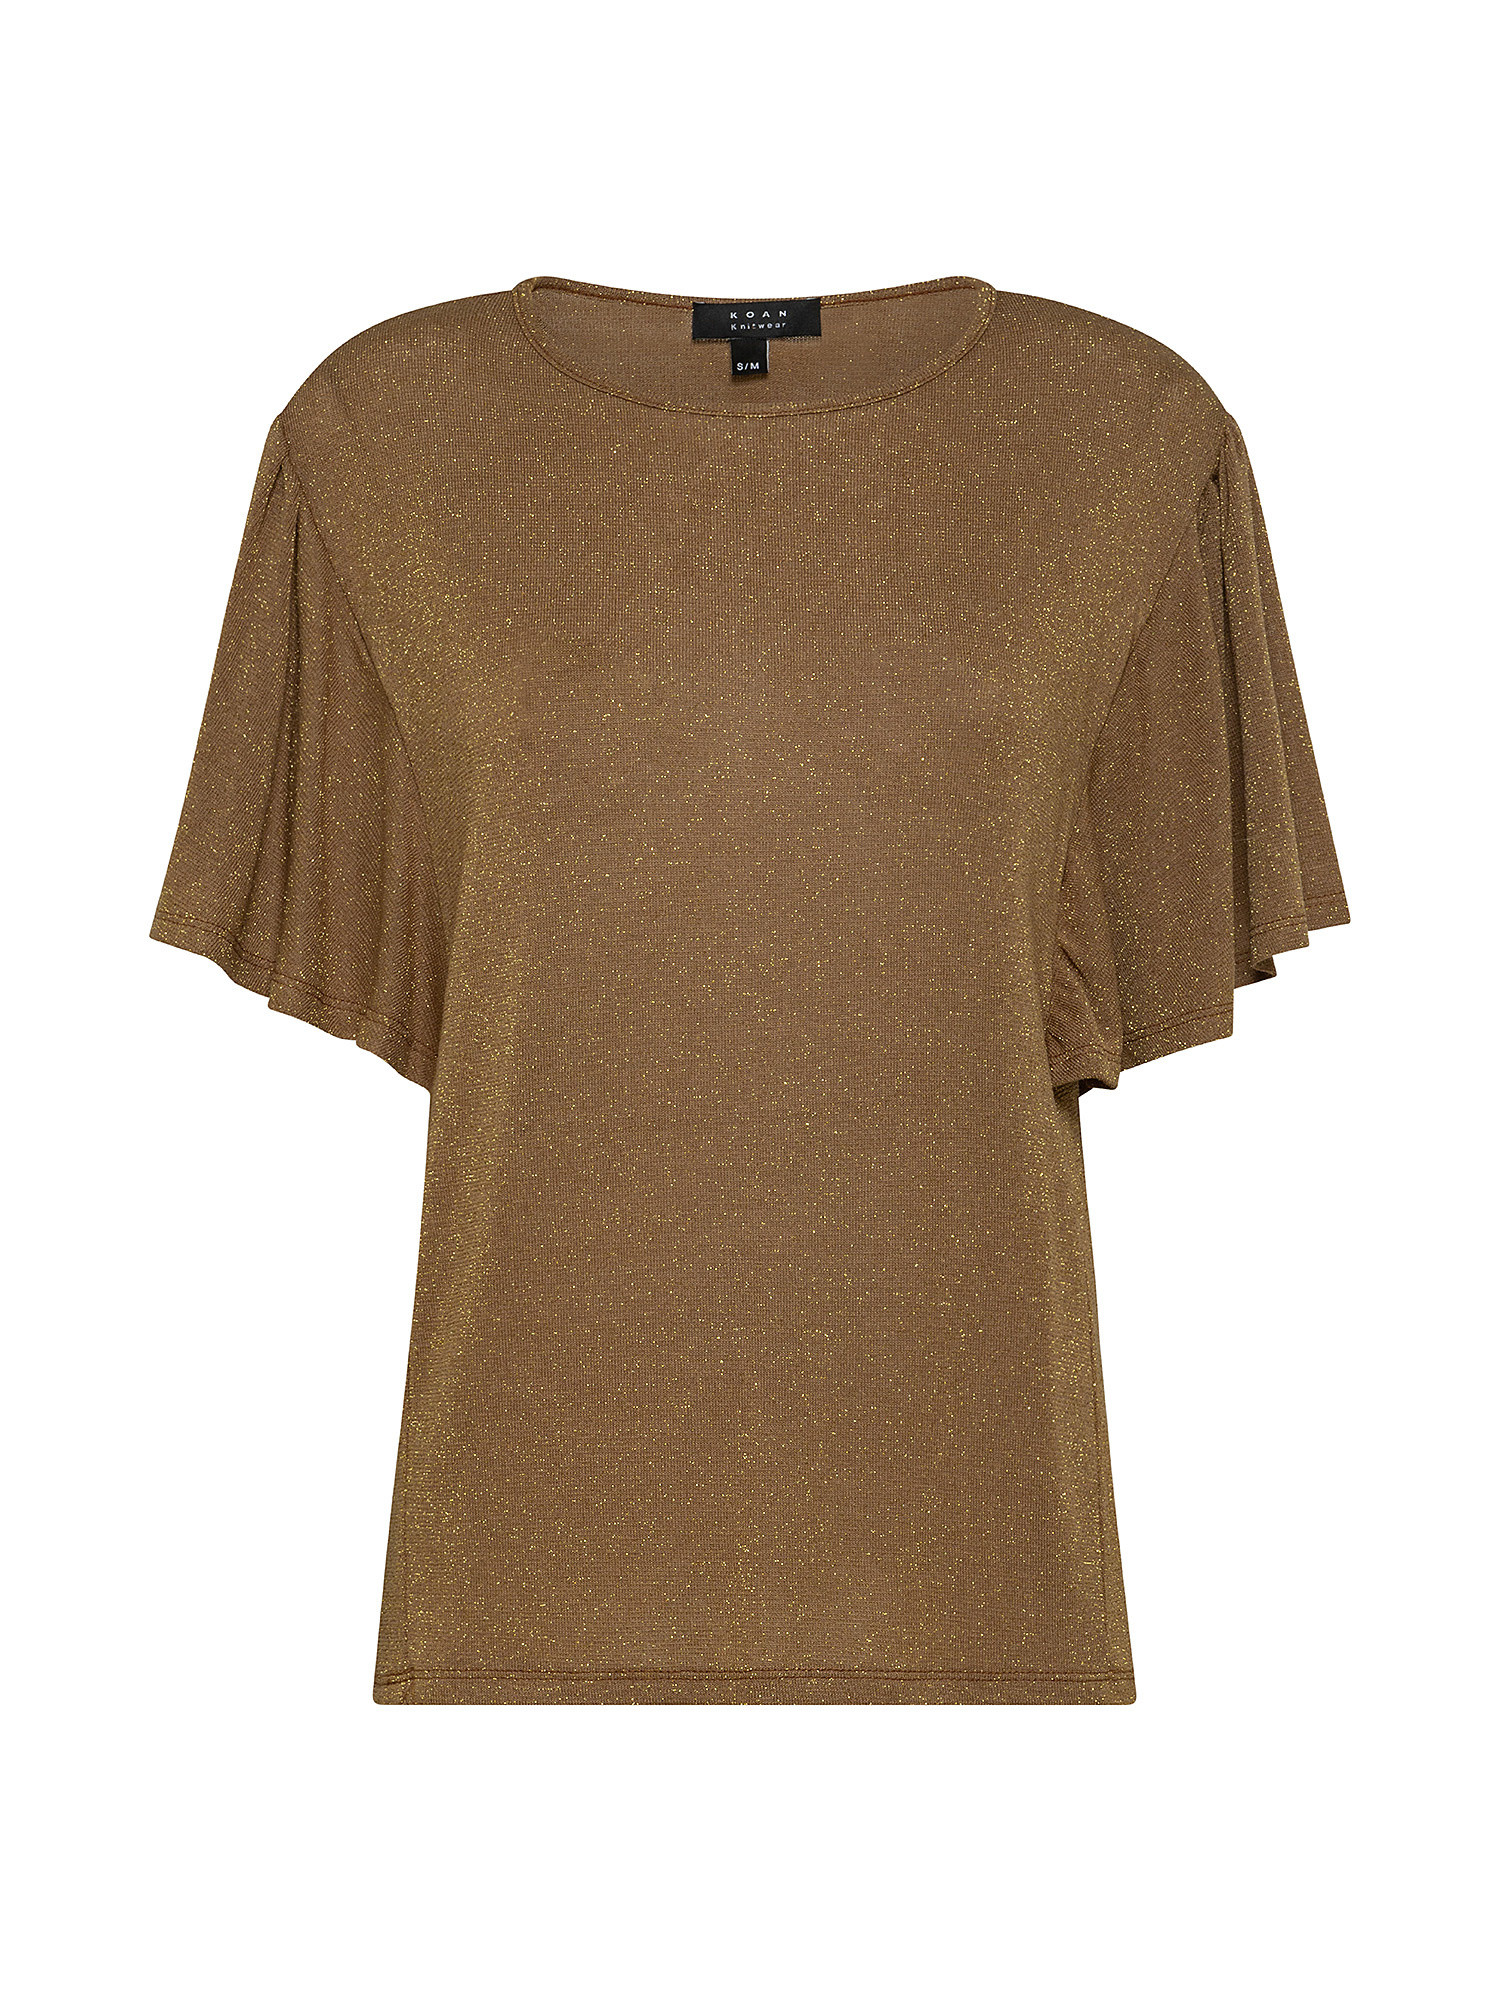 Bat sleeve T-shirt, Brown, large image number 0